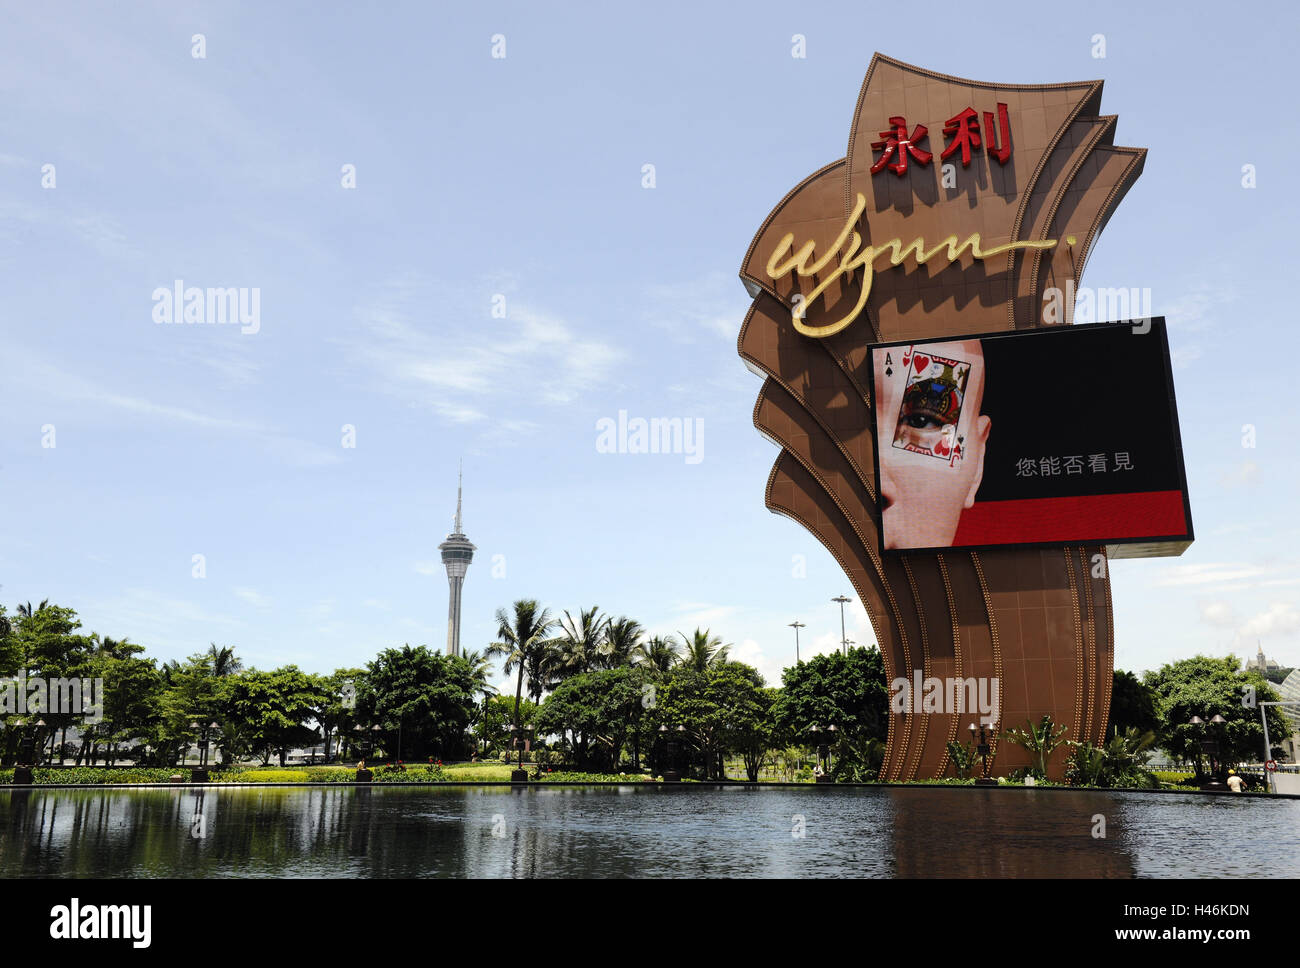 Wynn Casino, pubblicità, invio di torre, acqua, palme, alberi, Macau, Cina Foto Stock